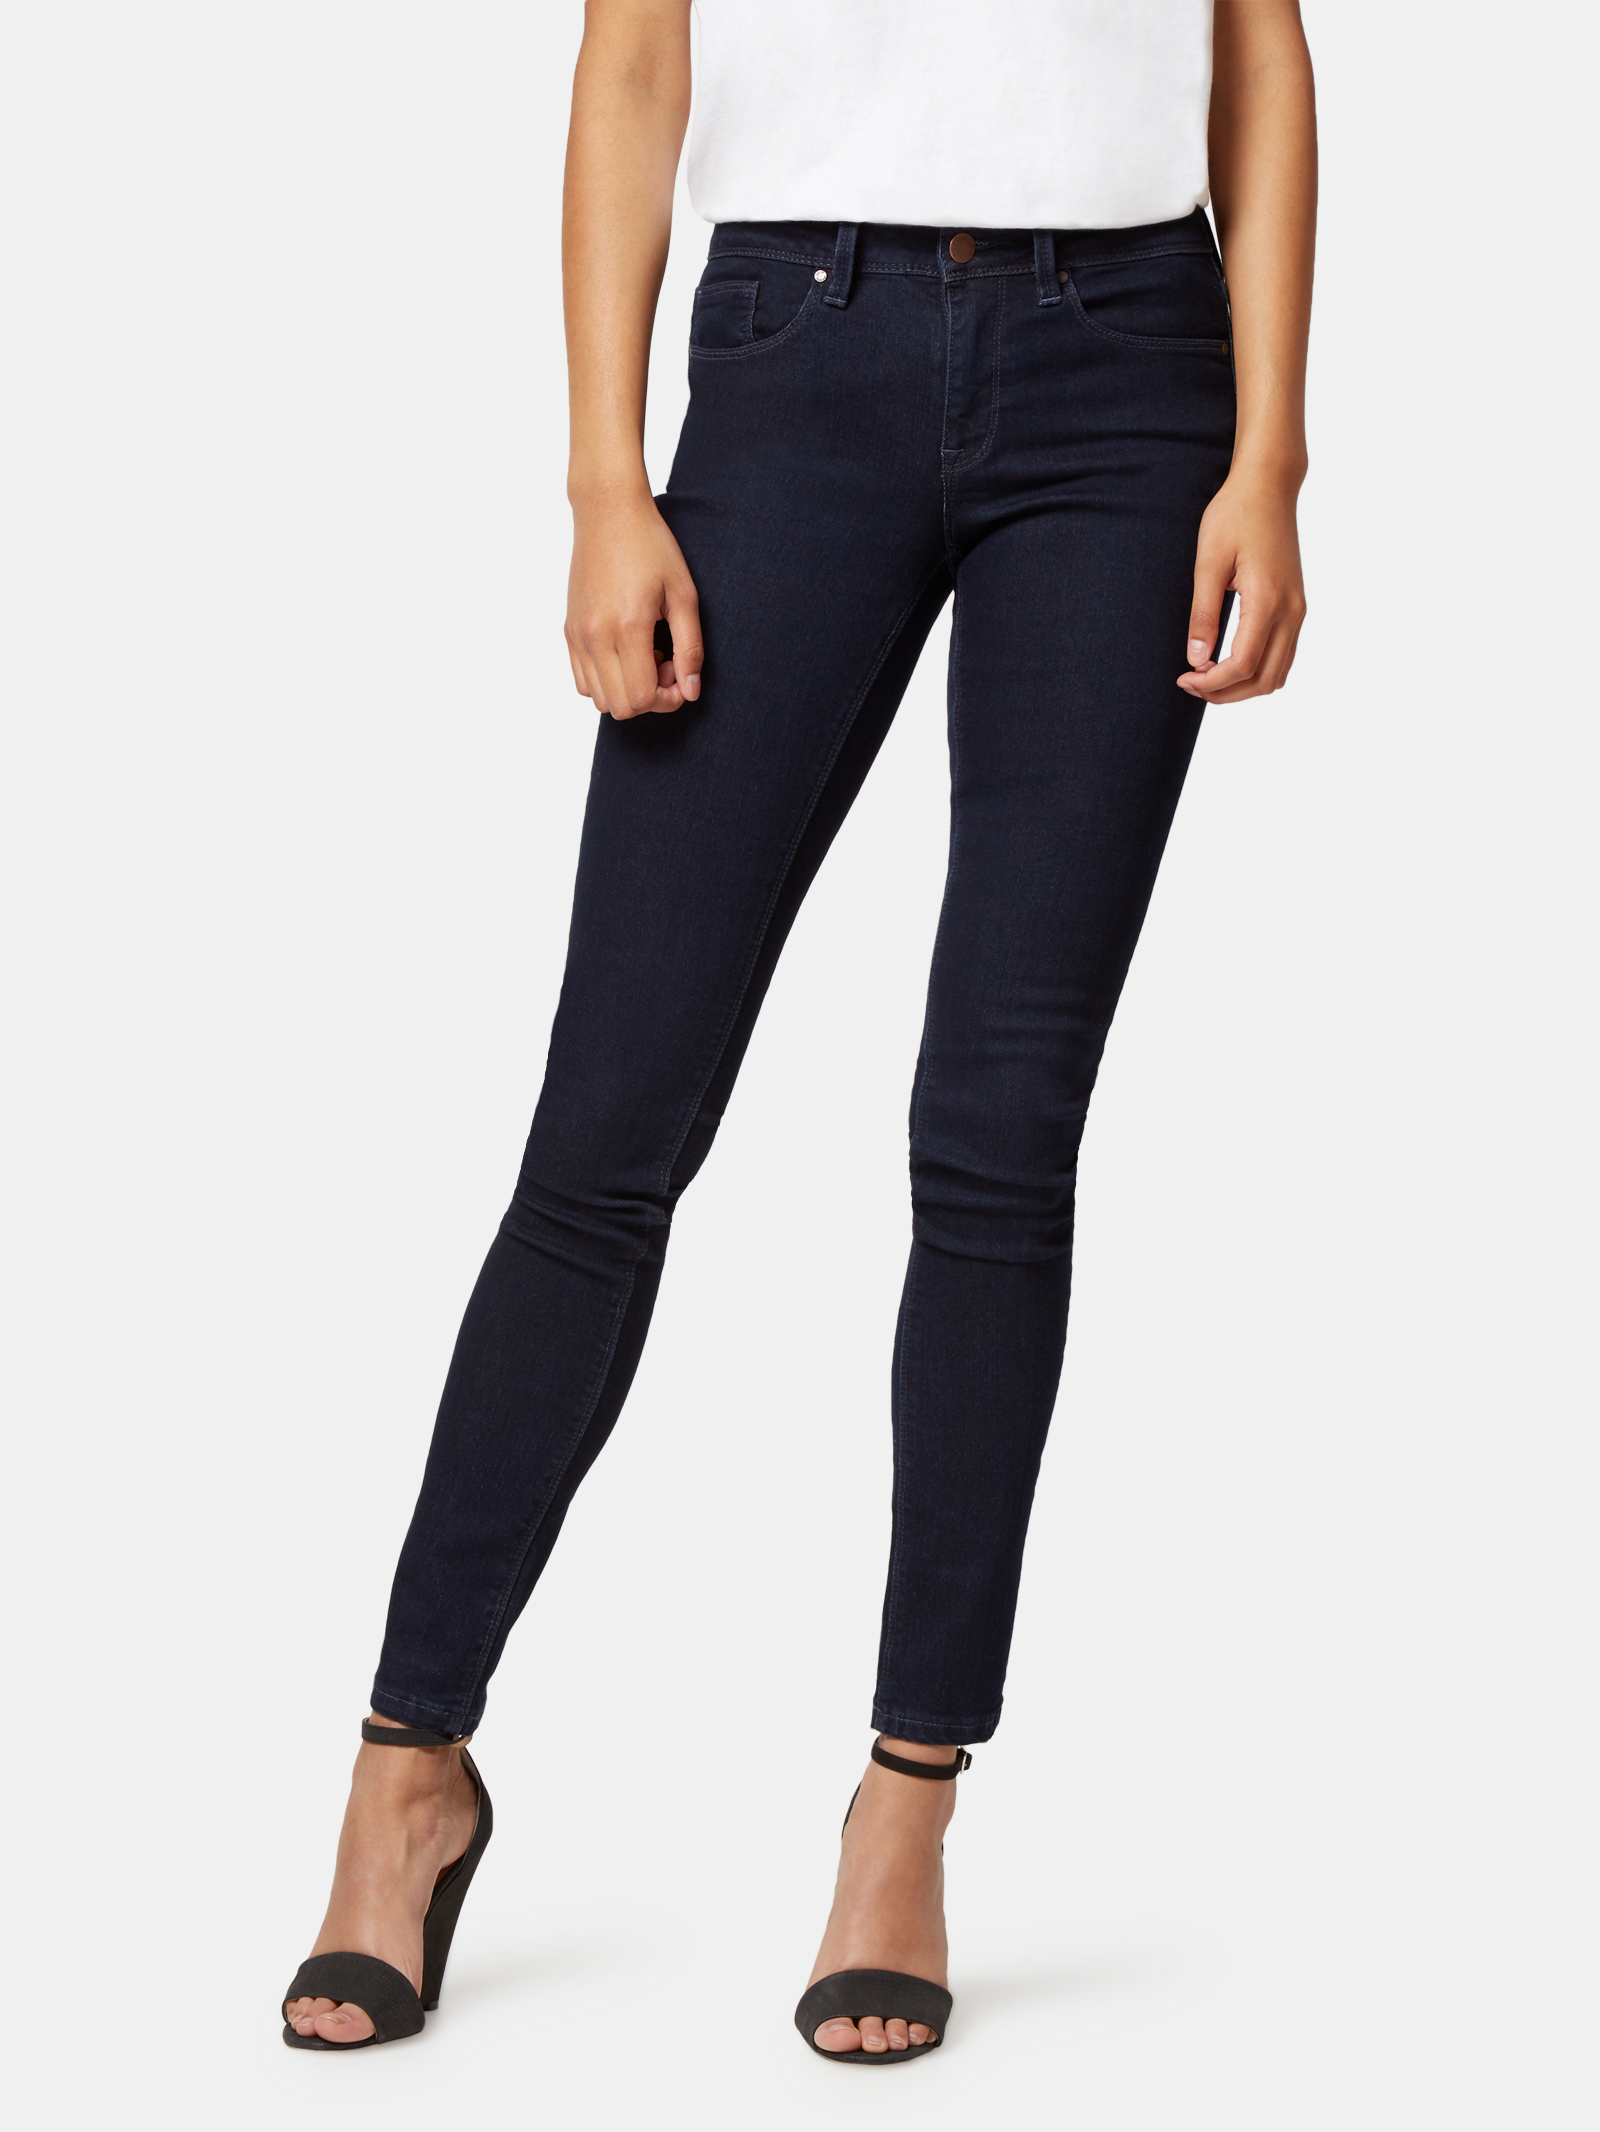 Skinny Jeans Absolute Indigo | Jeanswest